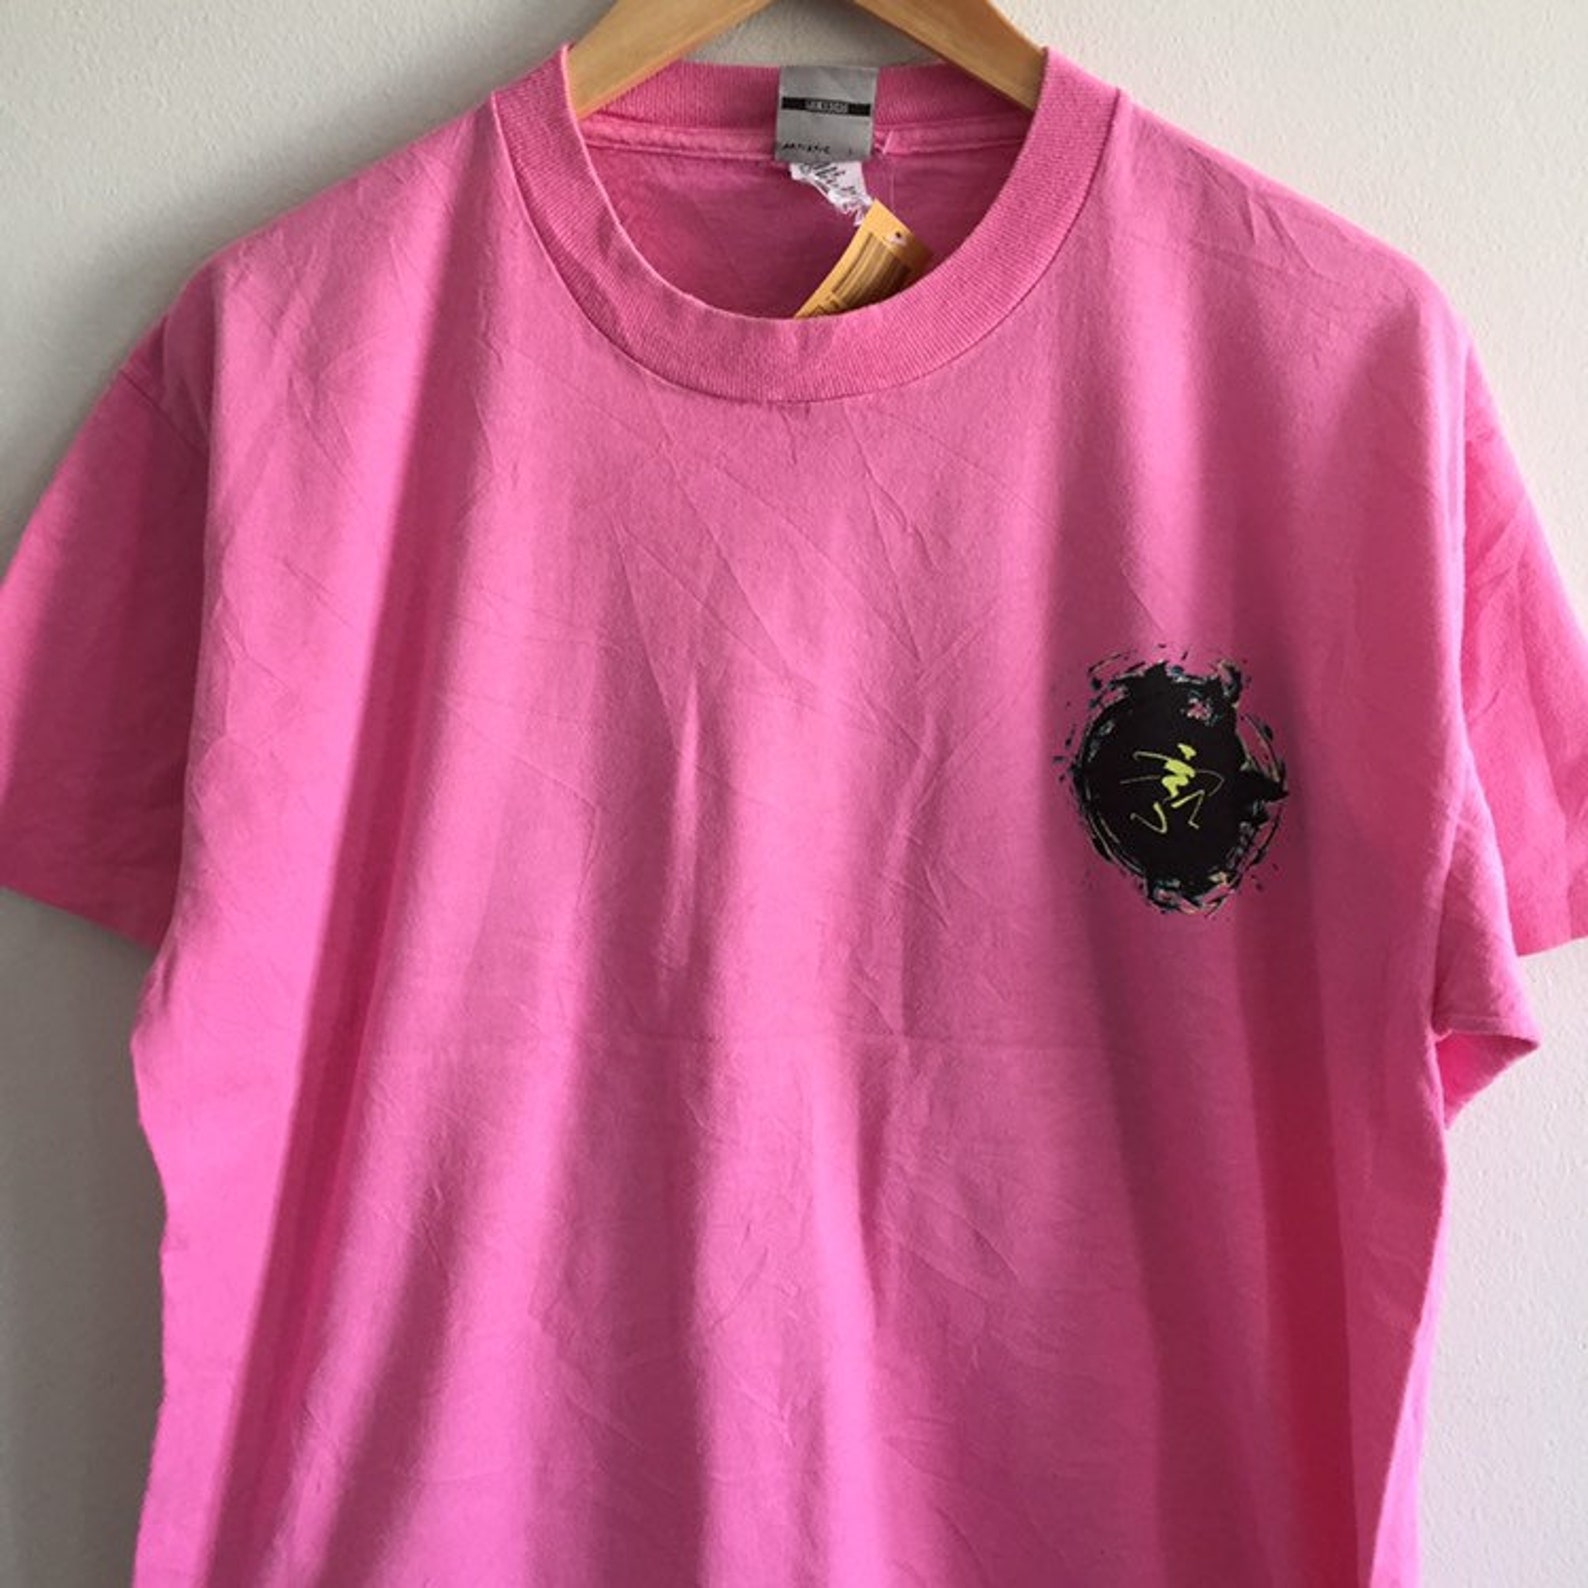 Vintage 90s Ocean Pacific T-Shirt size M | Etsy